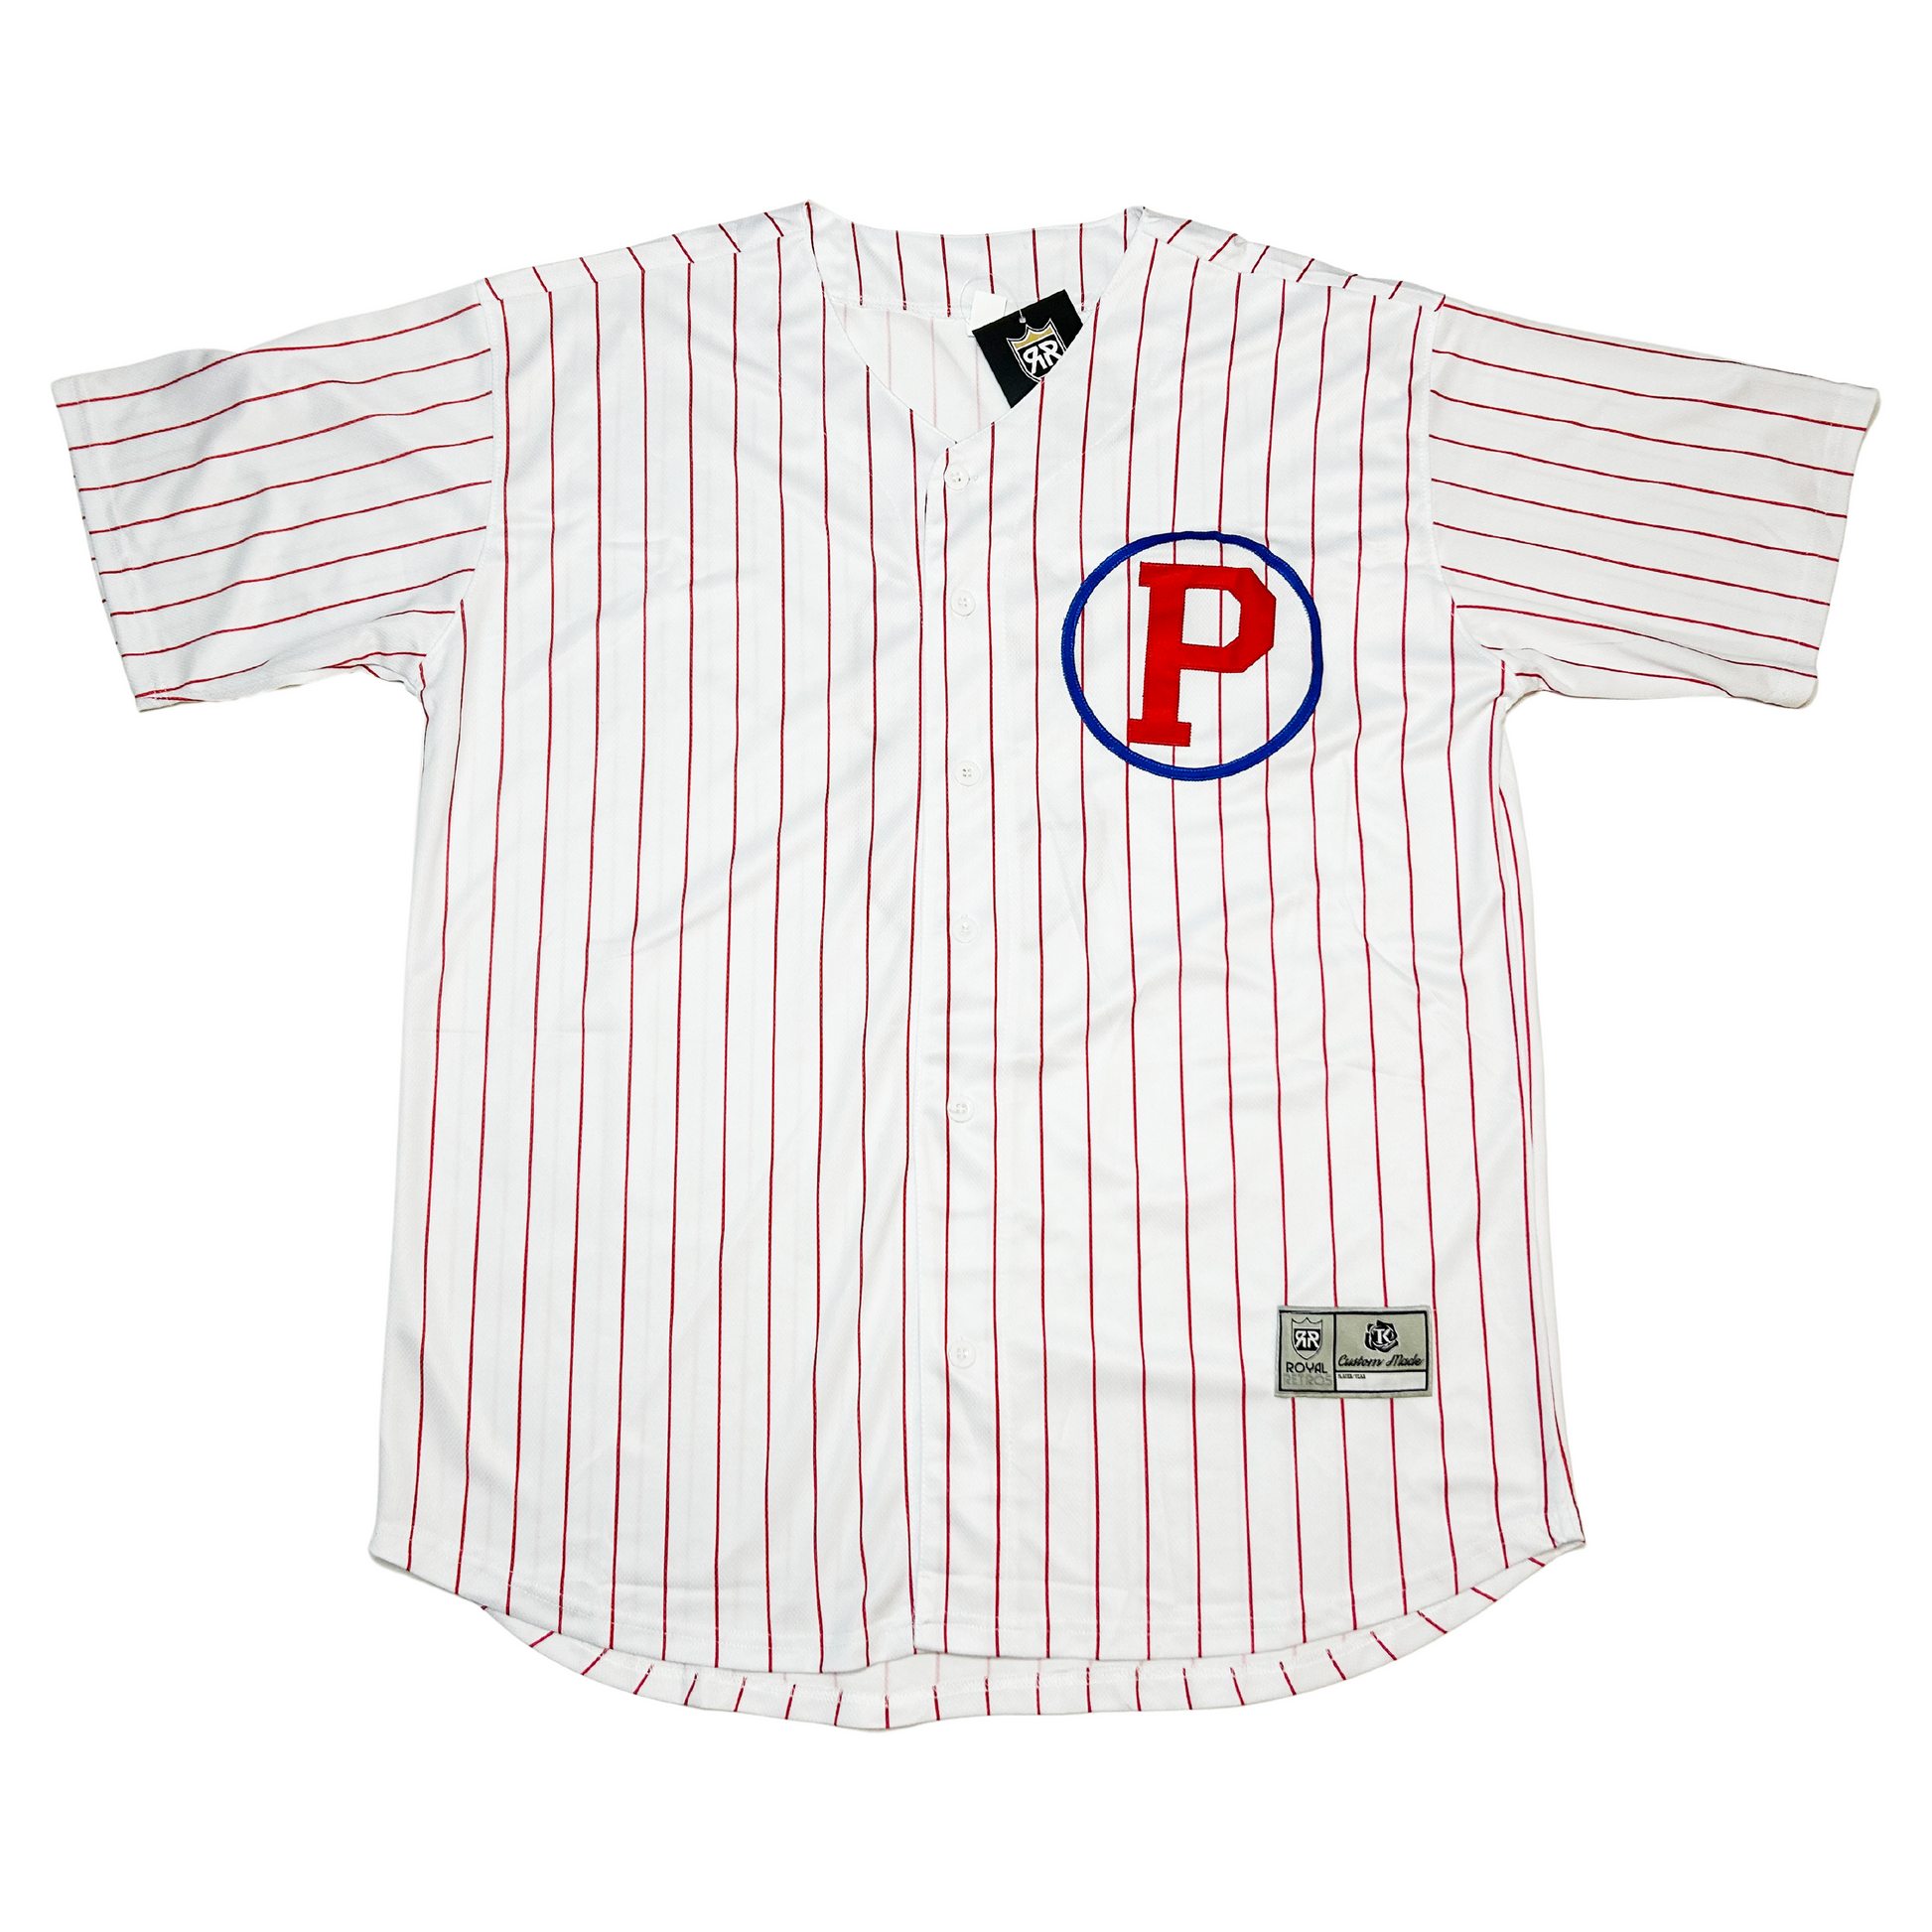 Brooklyn Baseball Jersey - Cream/Pinstripes - Medium - Royal Retros